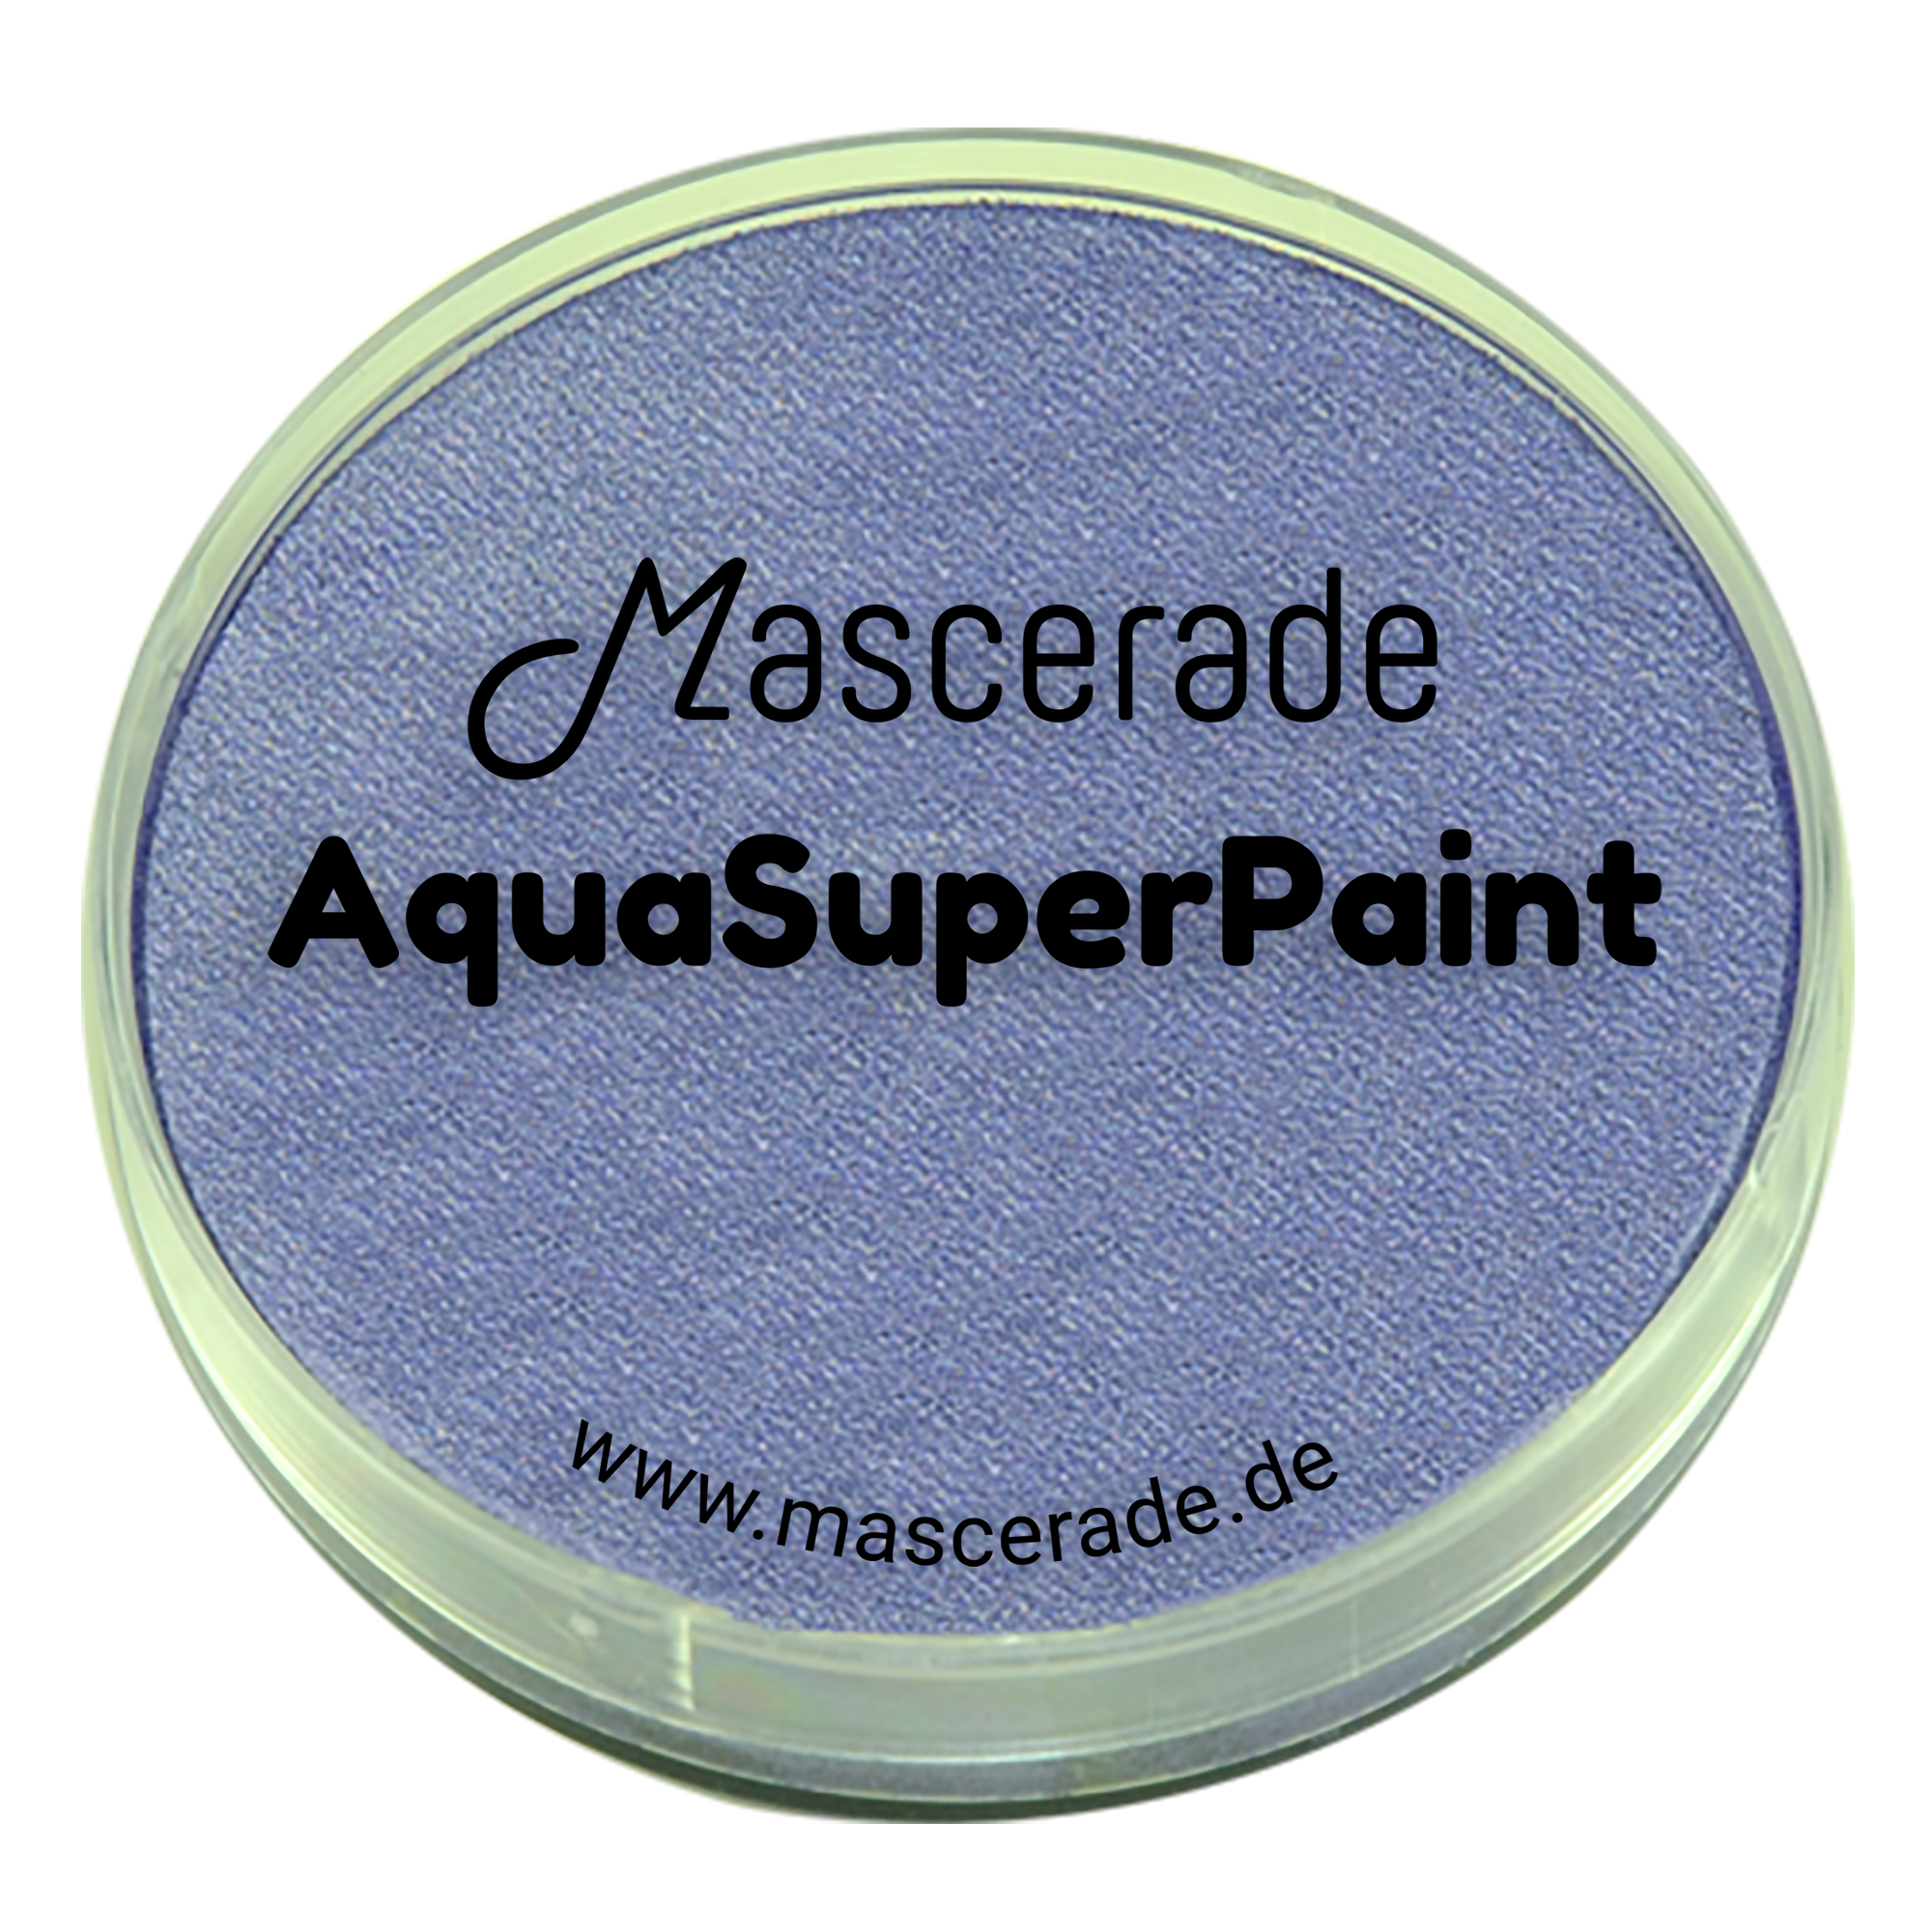 Mascerade AquaSuperPaint 30 ml Dose, Violett mit Perlglanz_crystal-jubilee.pearl